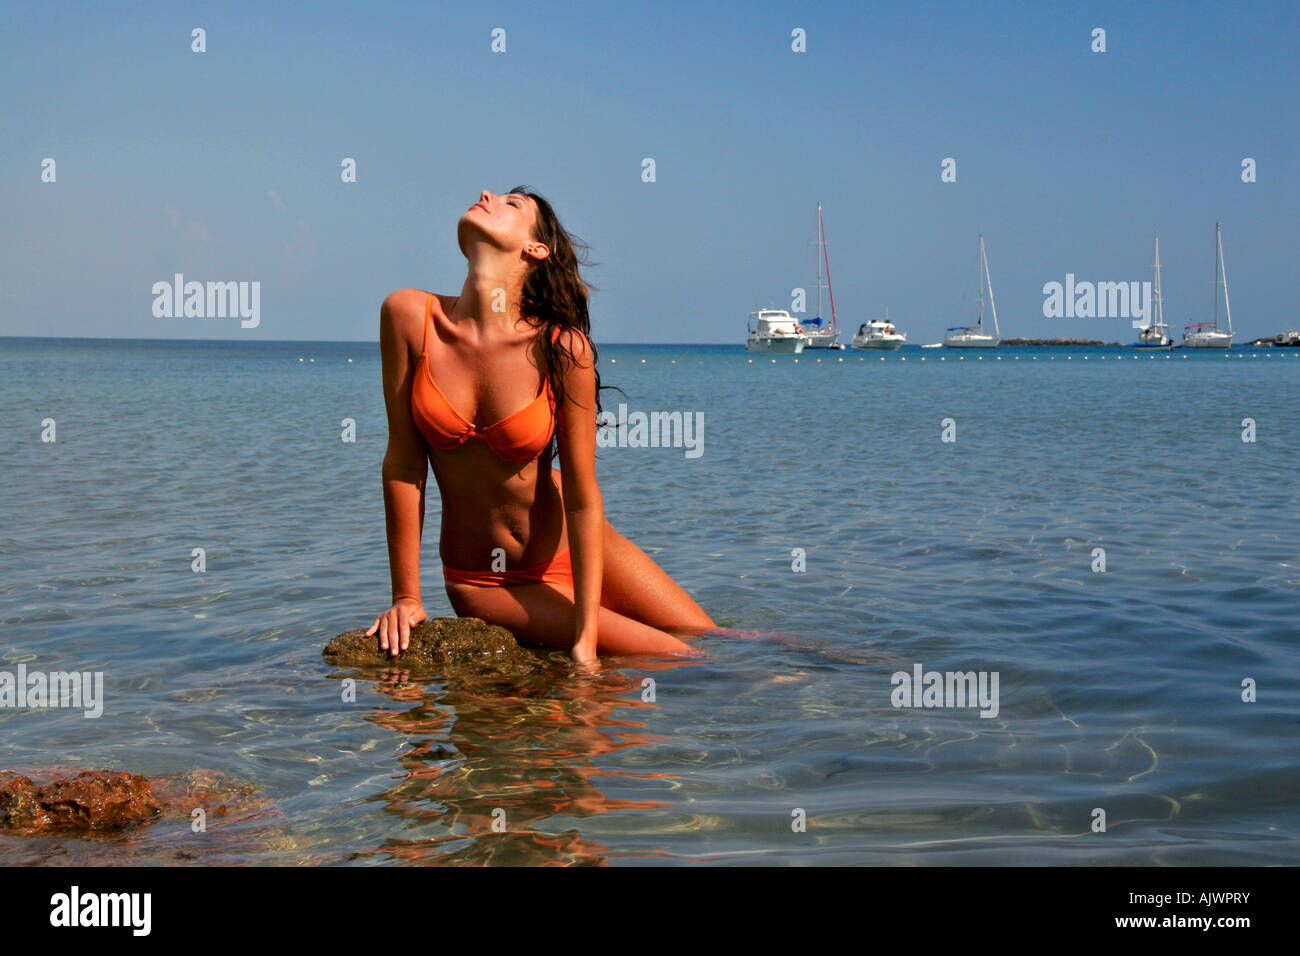 HRV Kroatien Dubrovnik 27 05 2007 Junge Frau beim Sonnenbaden im Meer Croazia 27 05 2007 giovane donna con bagni di sole in mare Foto Stock